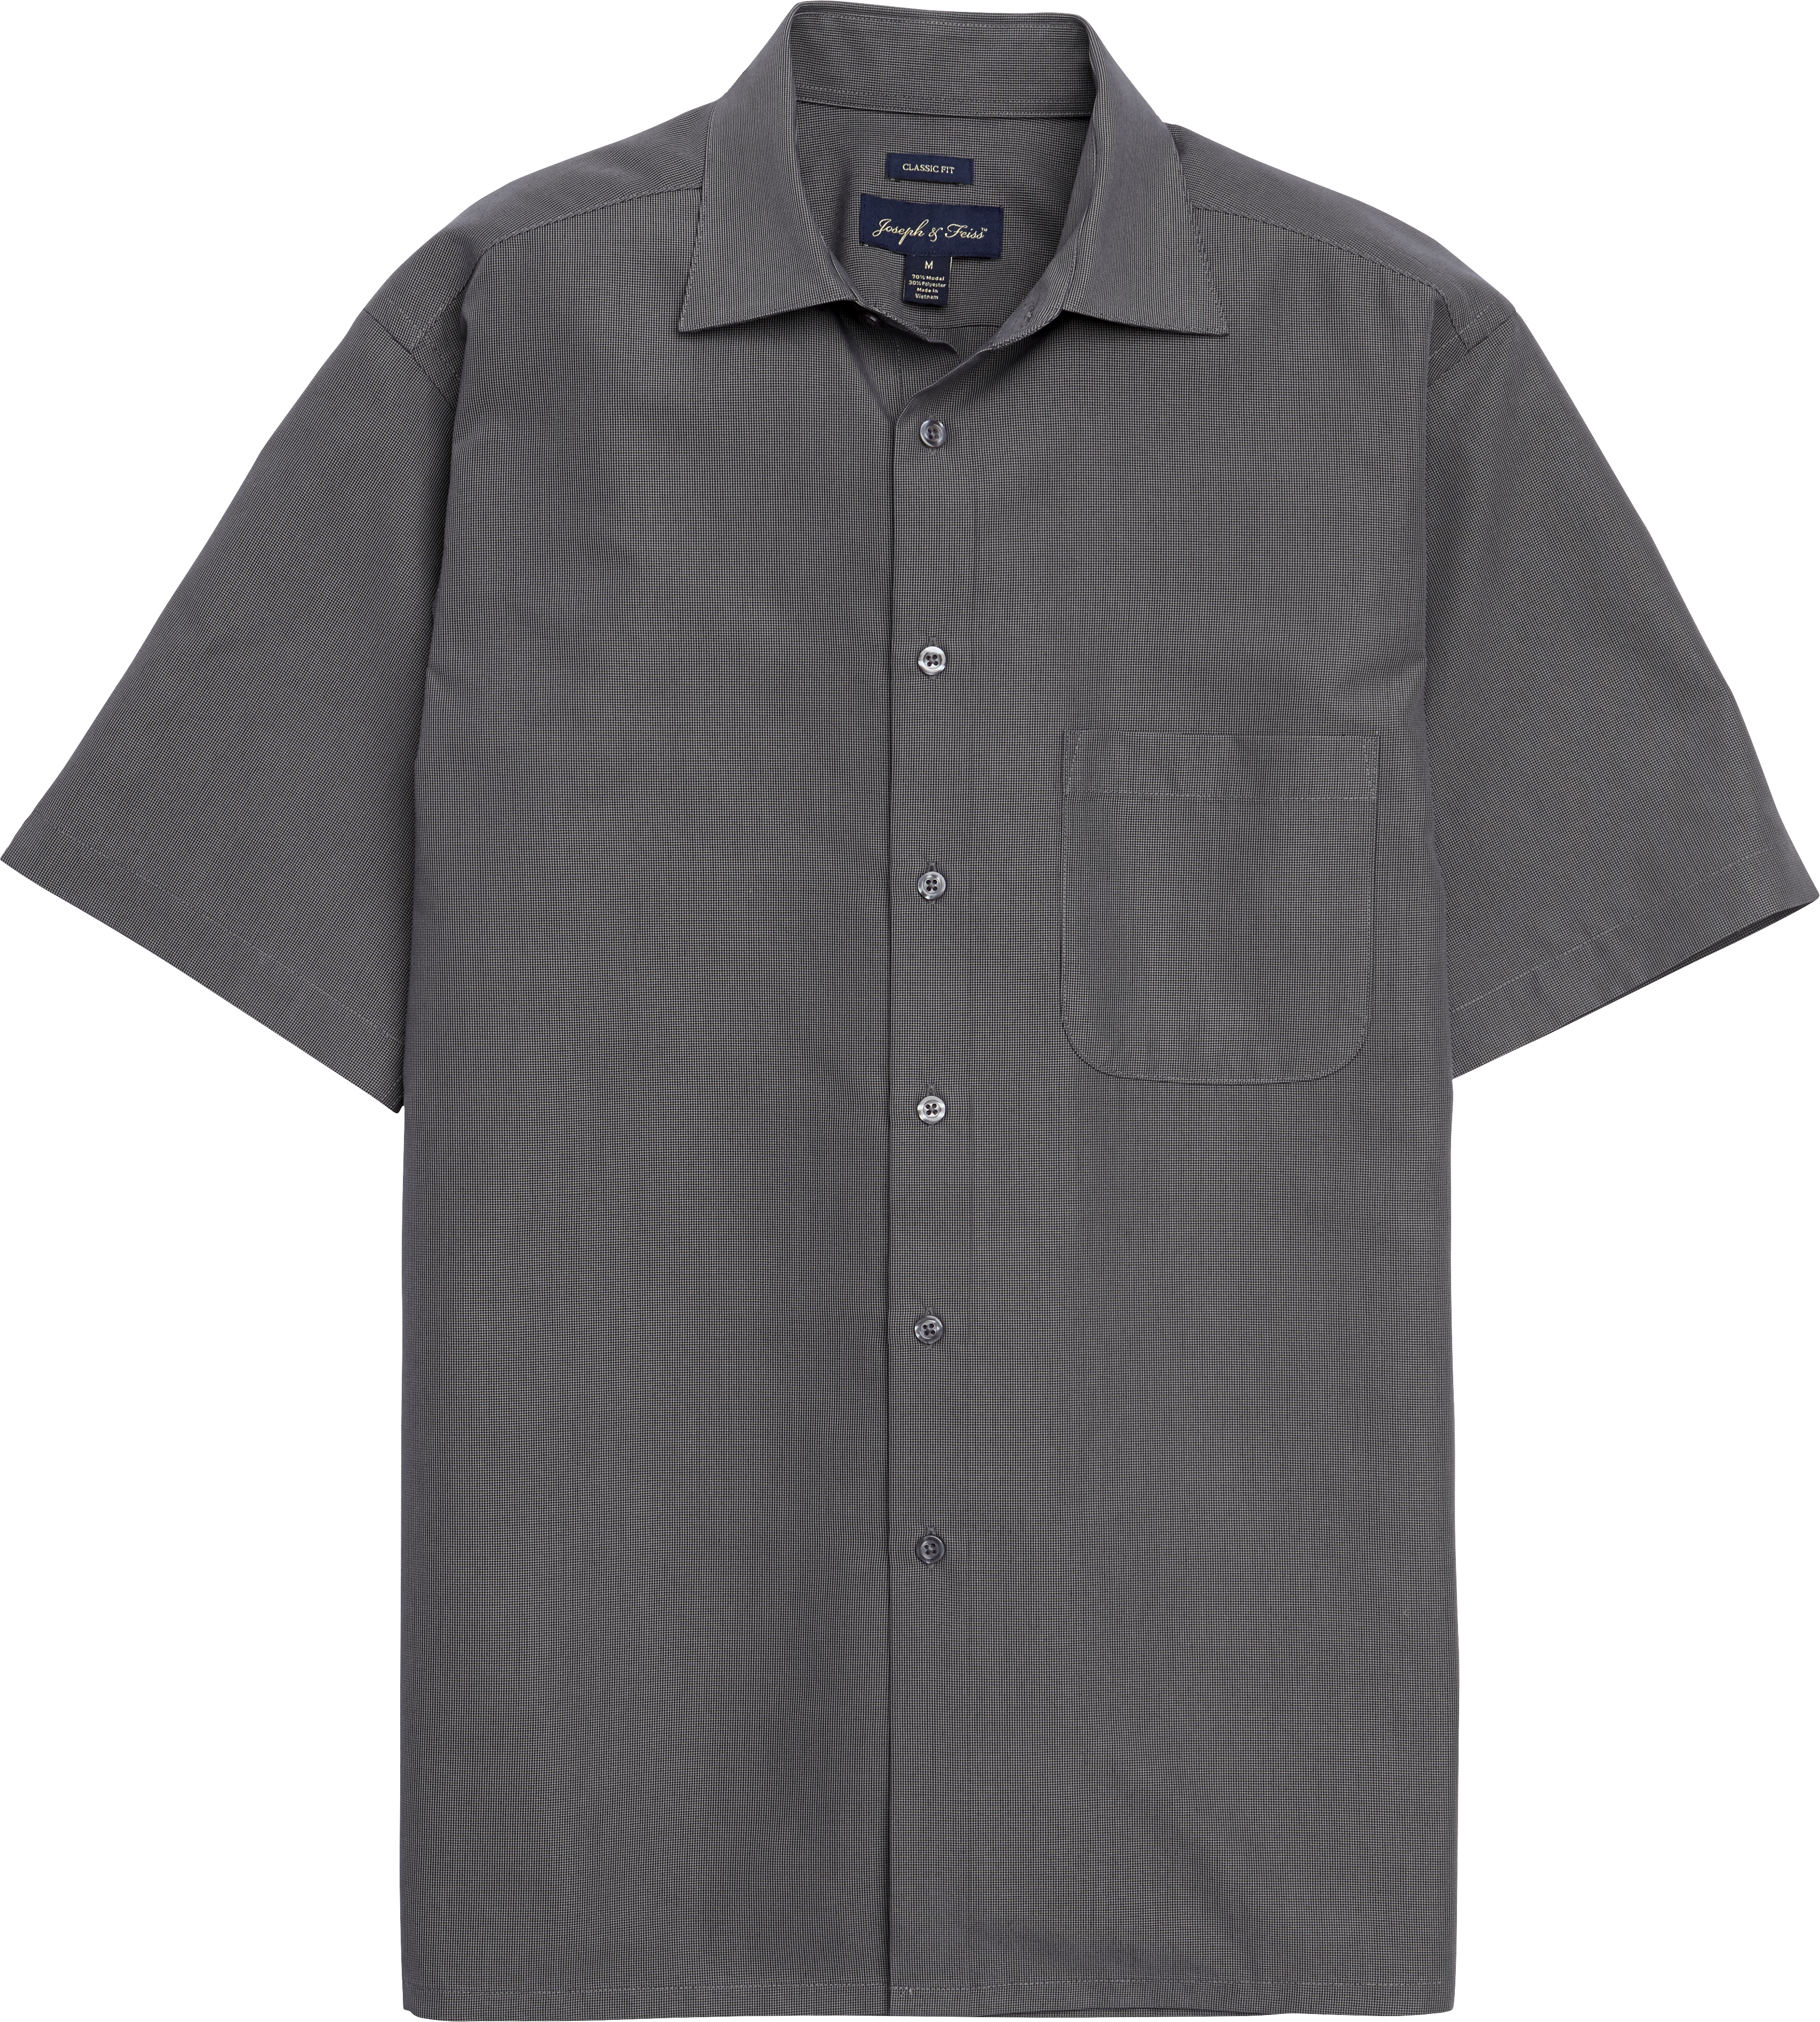 Joseph & Feiss Black Camp Shirt - Men's Sale | Men's Wearhouse